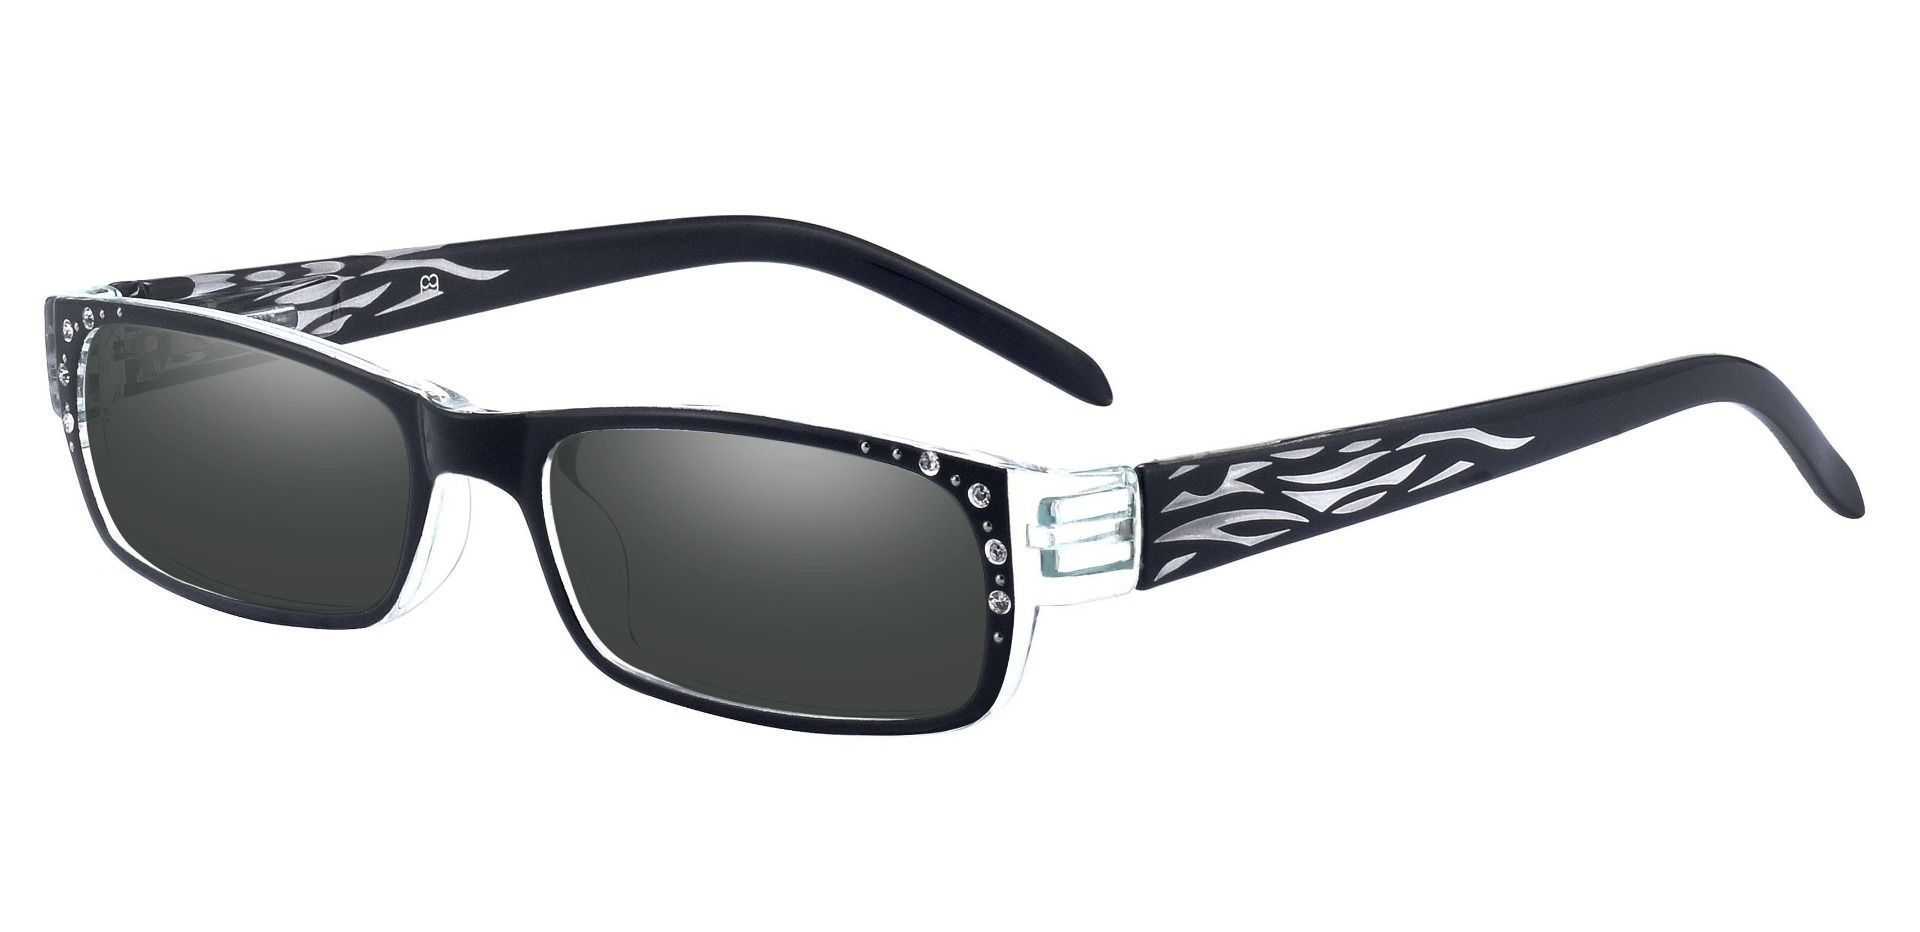 Diva Rectangle Single Vision Sunglasses -  Black Frame With Gray Lenses